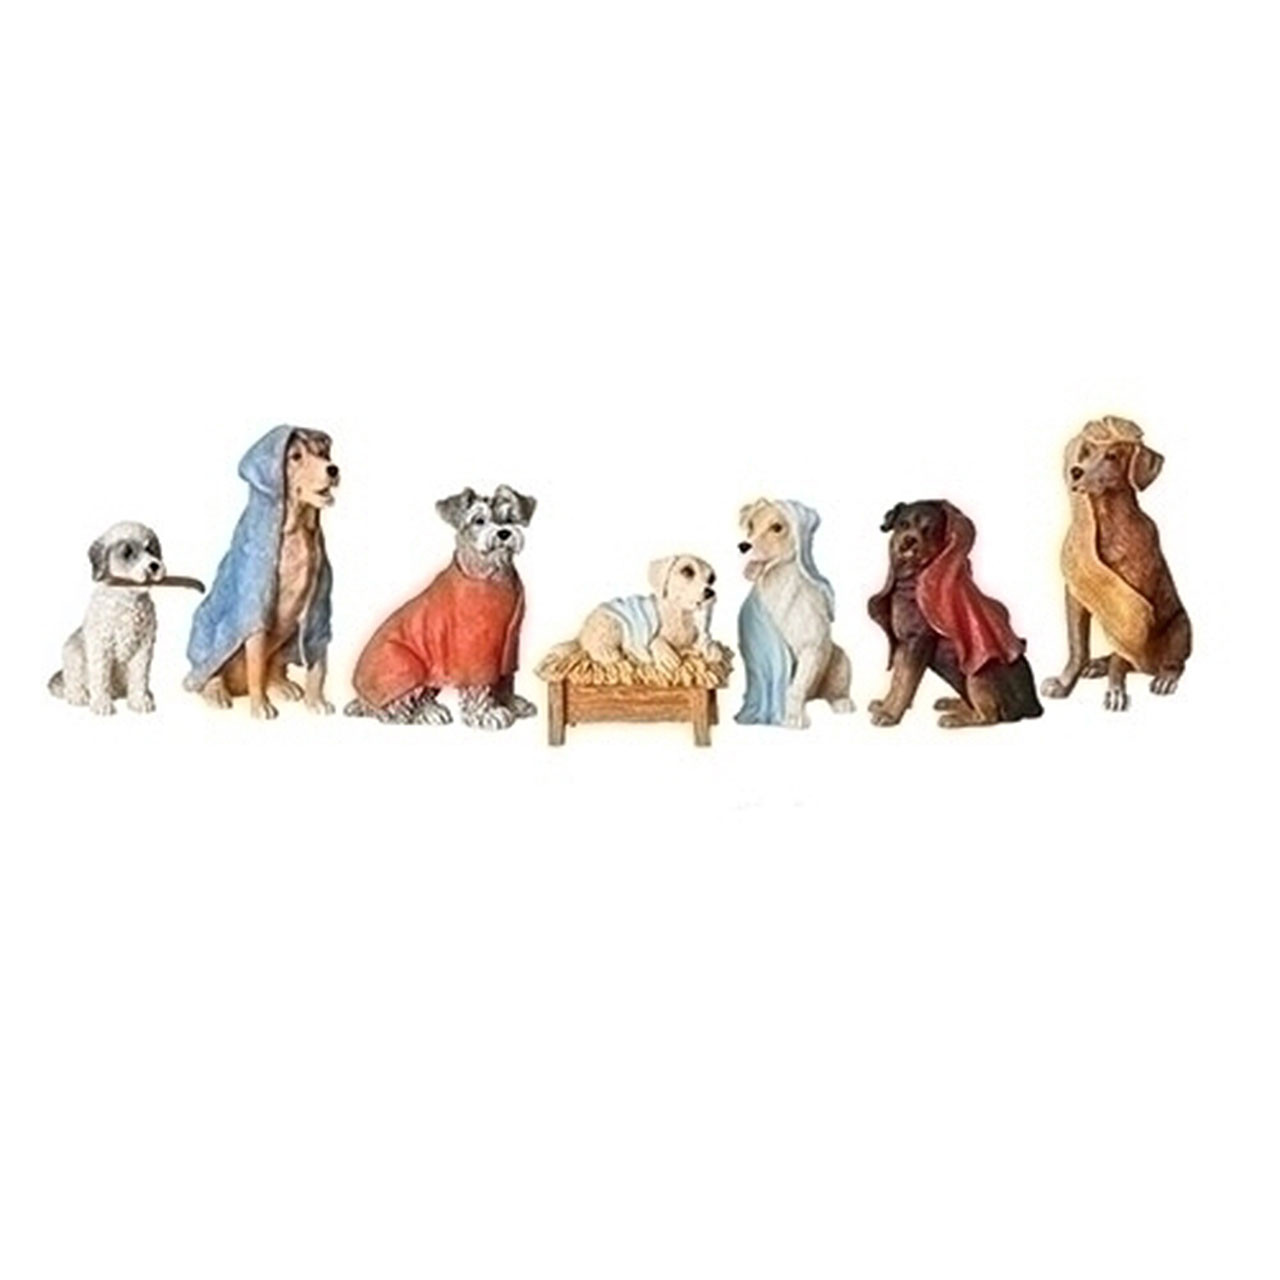 Dog Nativity Set